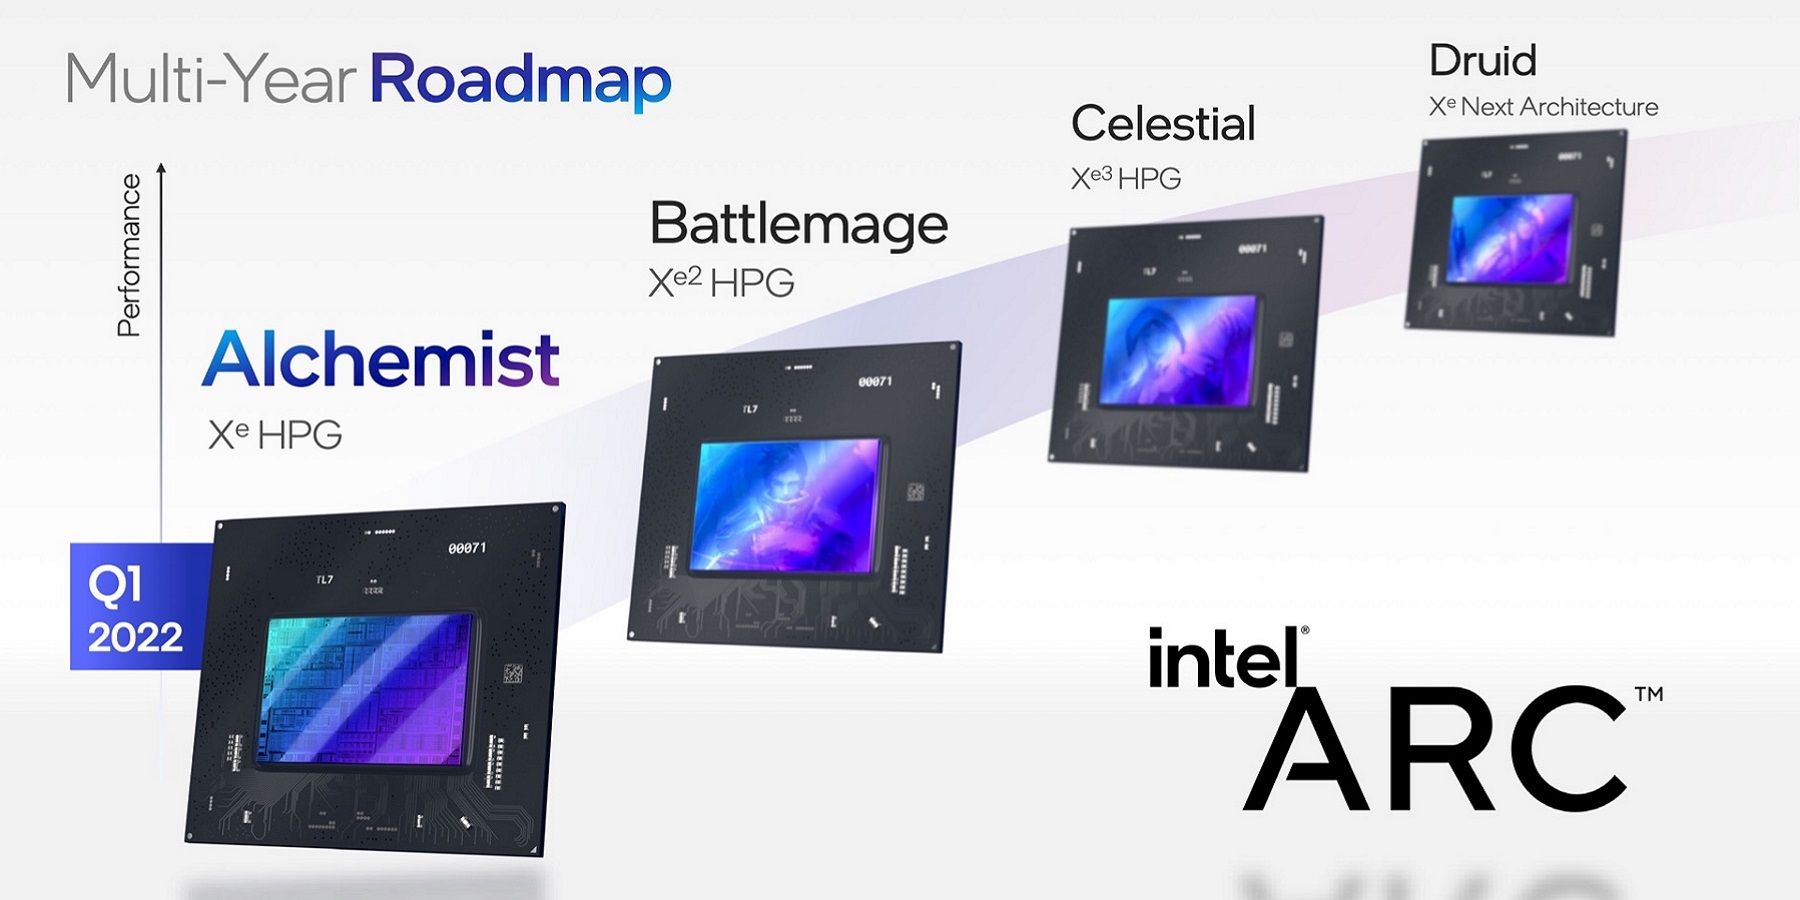 Rumor Intel Arc Roadmap Suggests 4th Gen ‘Druid’ GPU Could Be Out In 2025